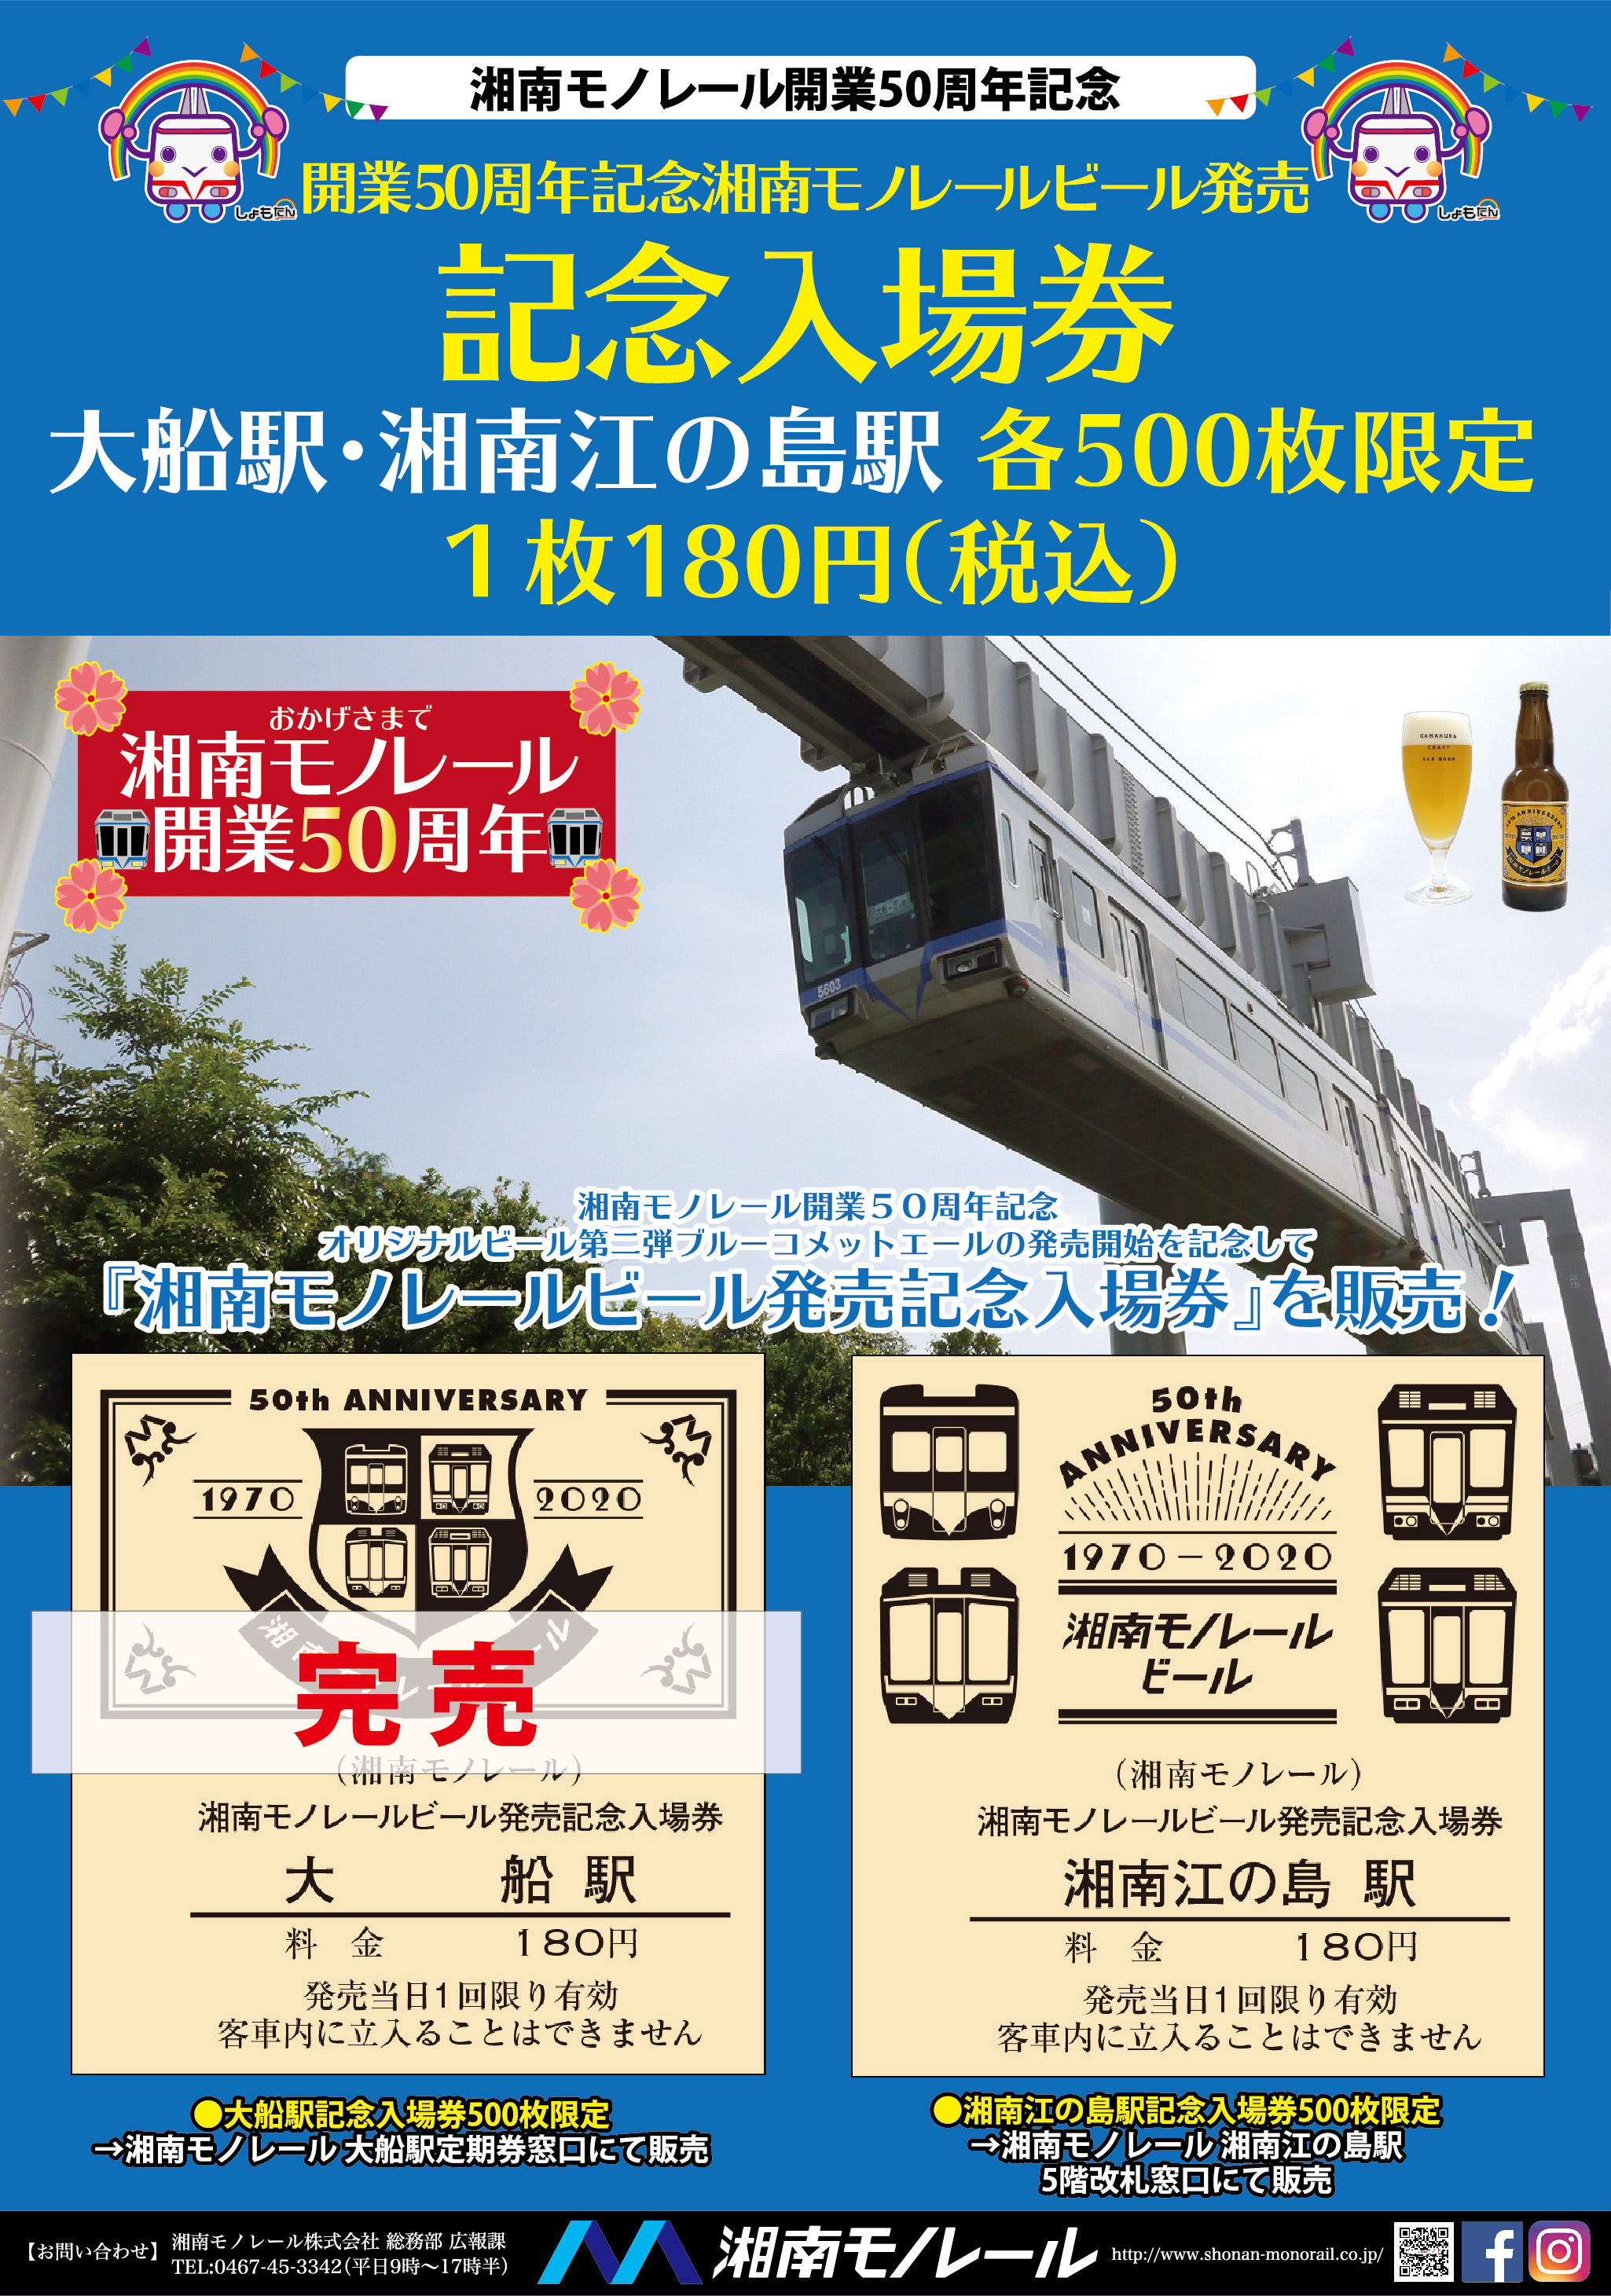 https://www.shonan-monorail.co.jp/news/upload/87bf984e514b6f3eaec4abea4ccad3701bddad72.jpg